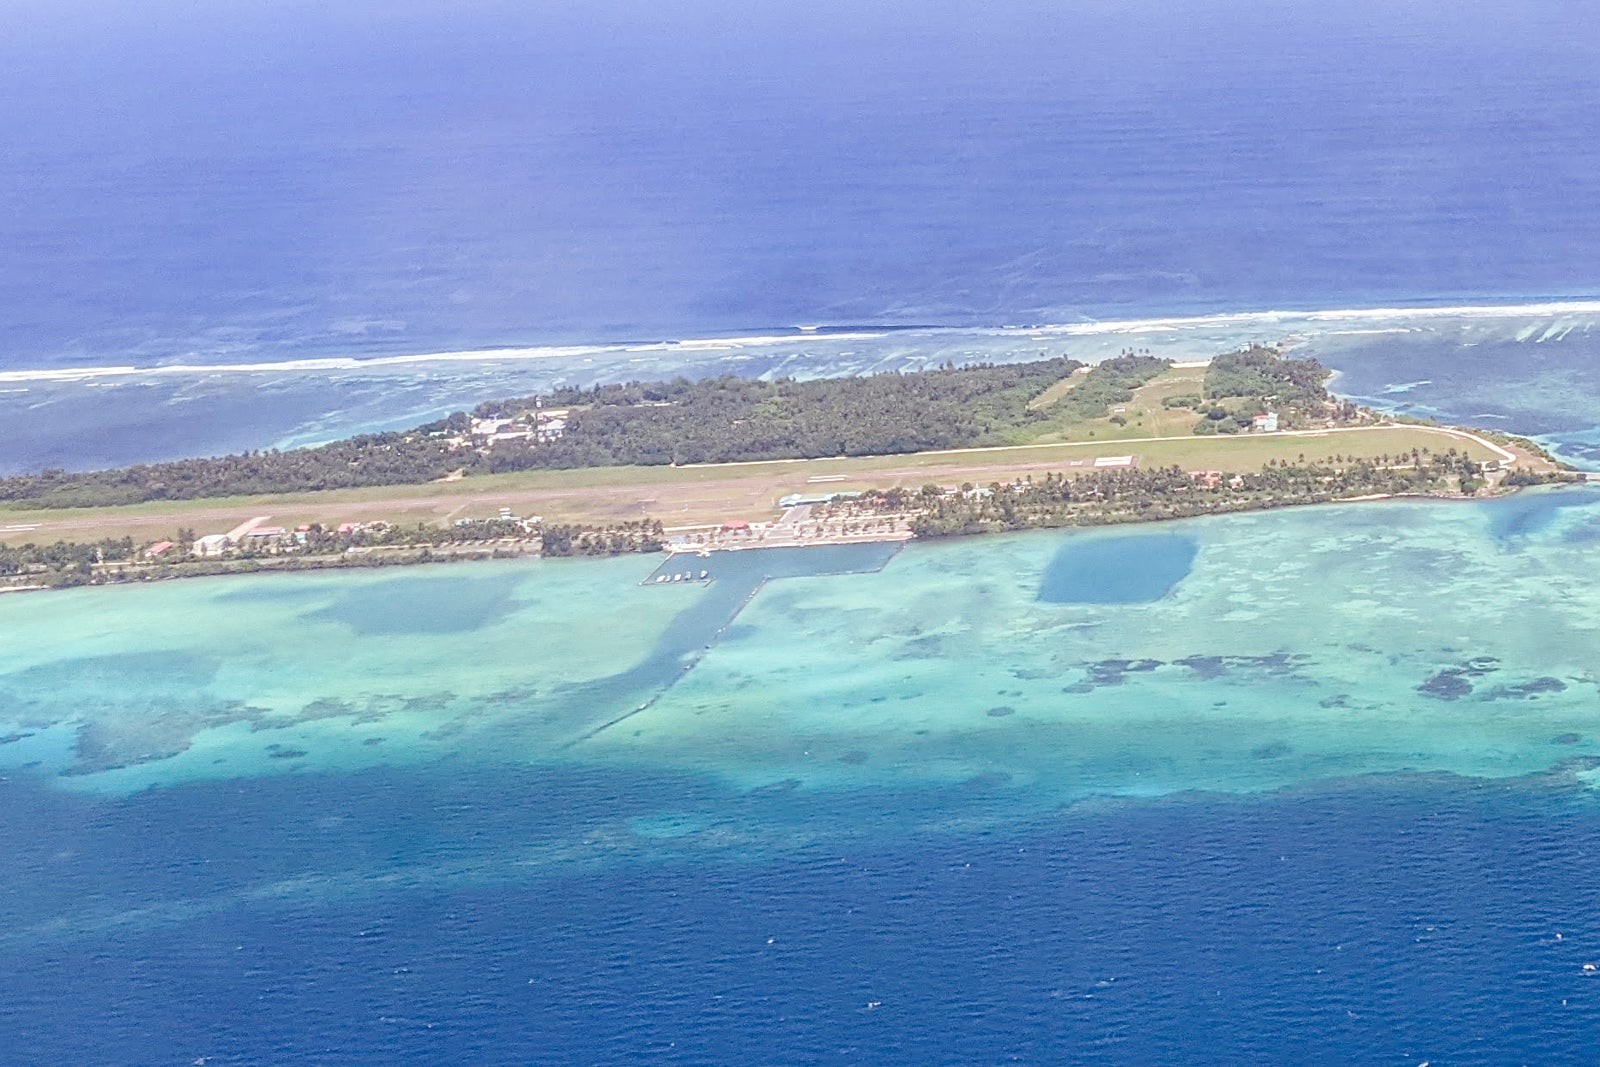 View of Kadhdhoo from Maldivian flight